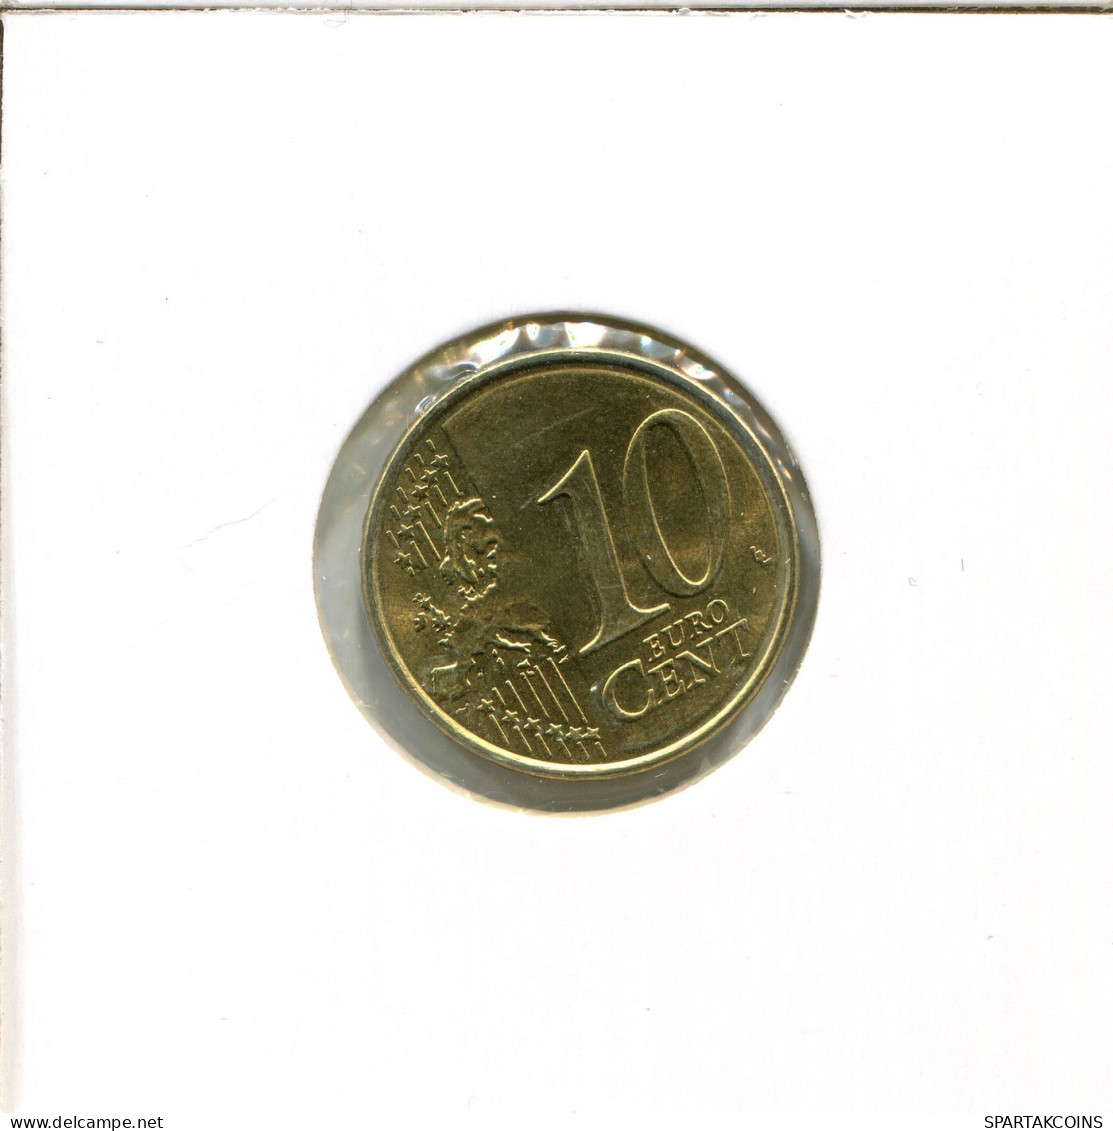 10 EURO CENTS 2008 FRANKREICH FRANCE Französisch Münze #EU450.D.A - Frankrijk